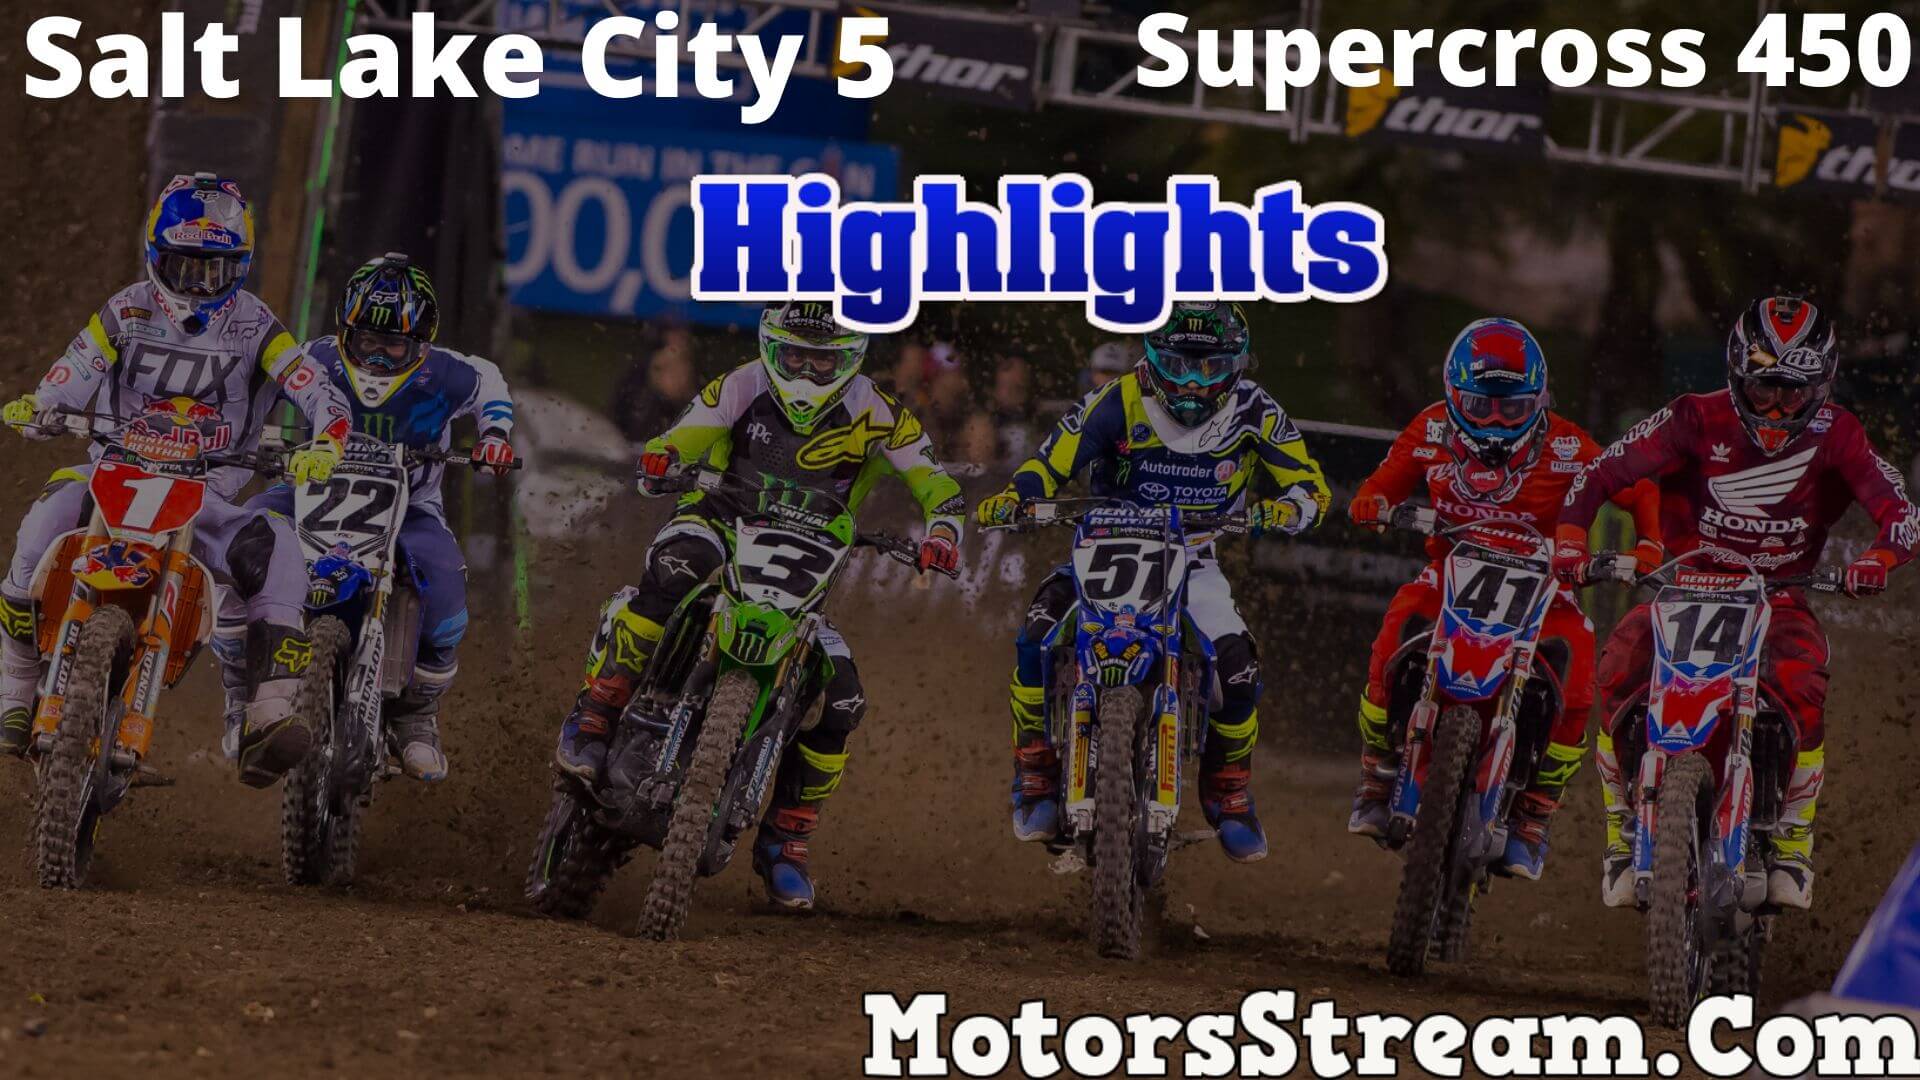 Super Lake City 5 Highlights 2020 Supercross 450